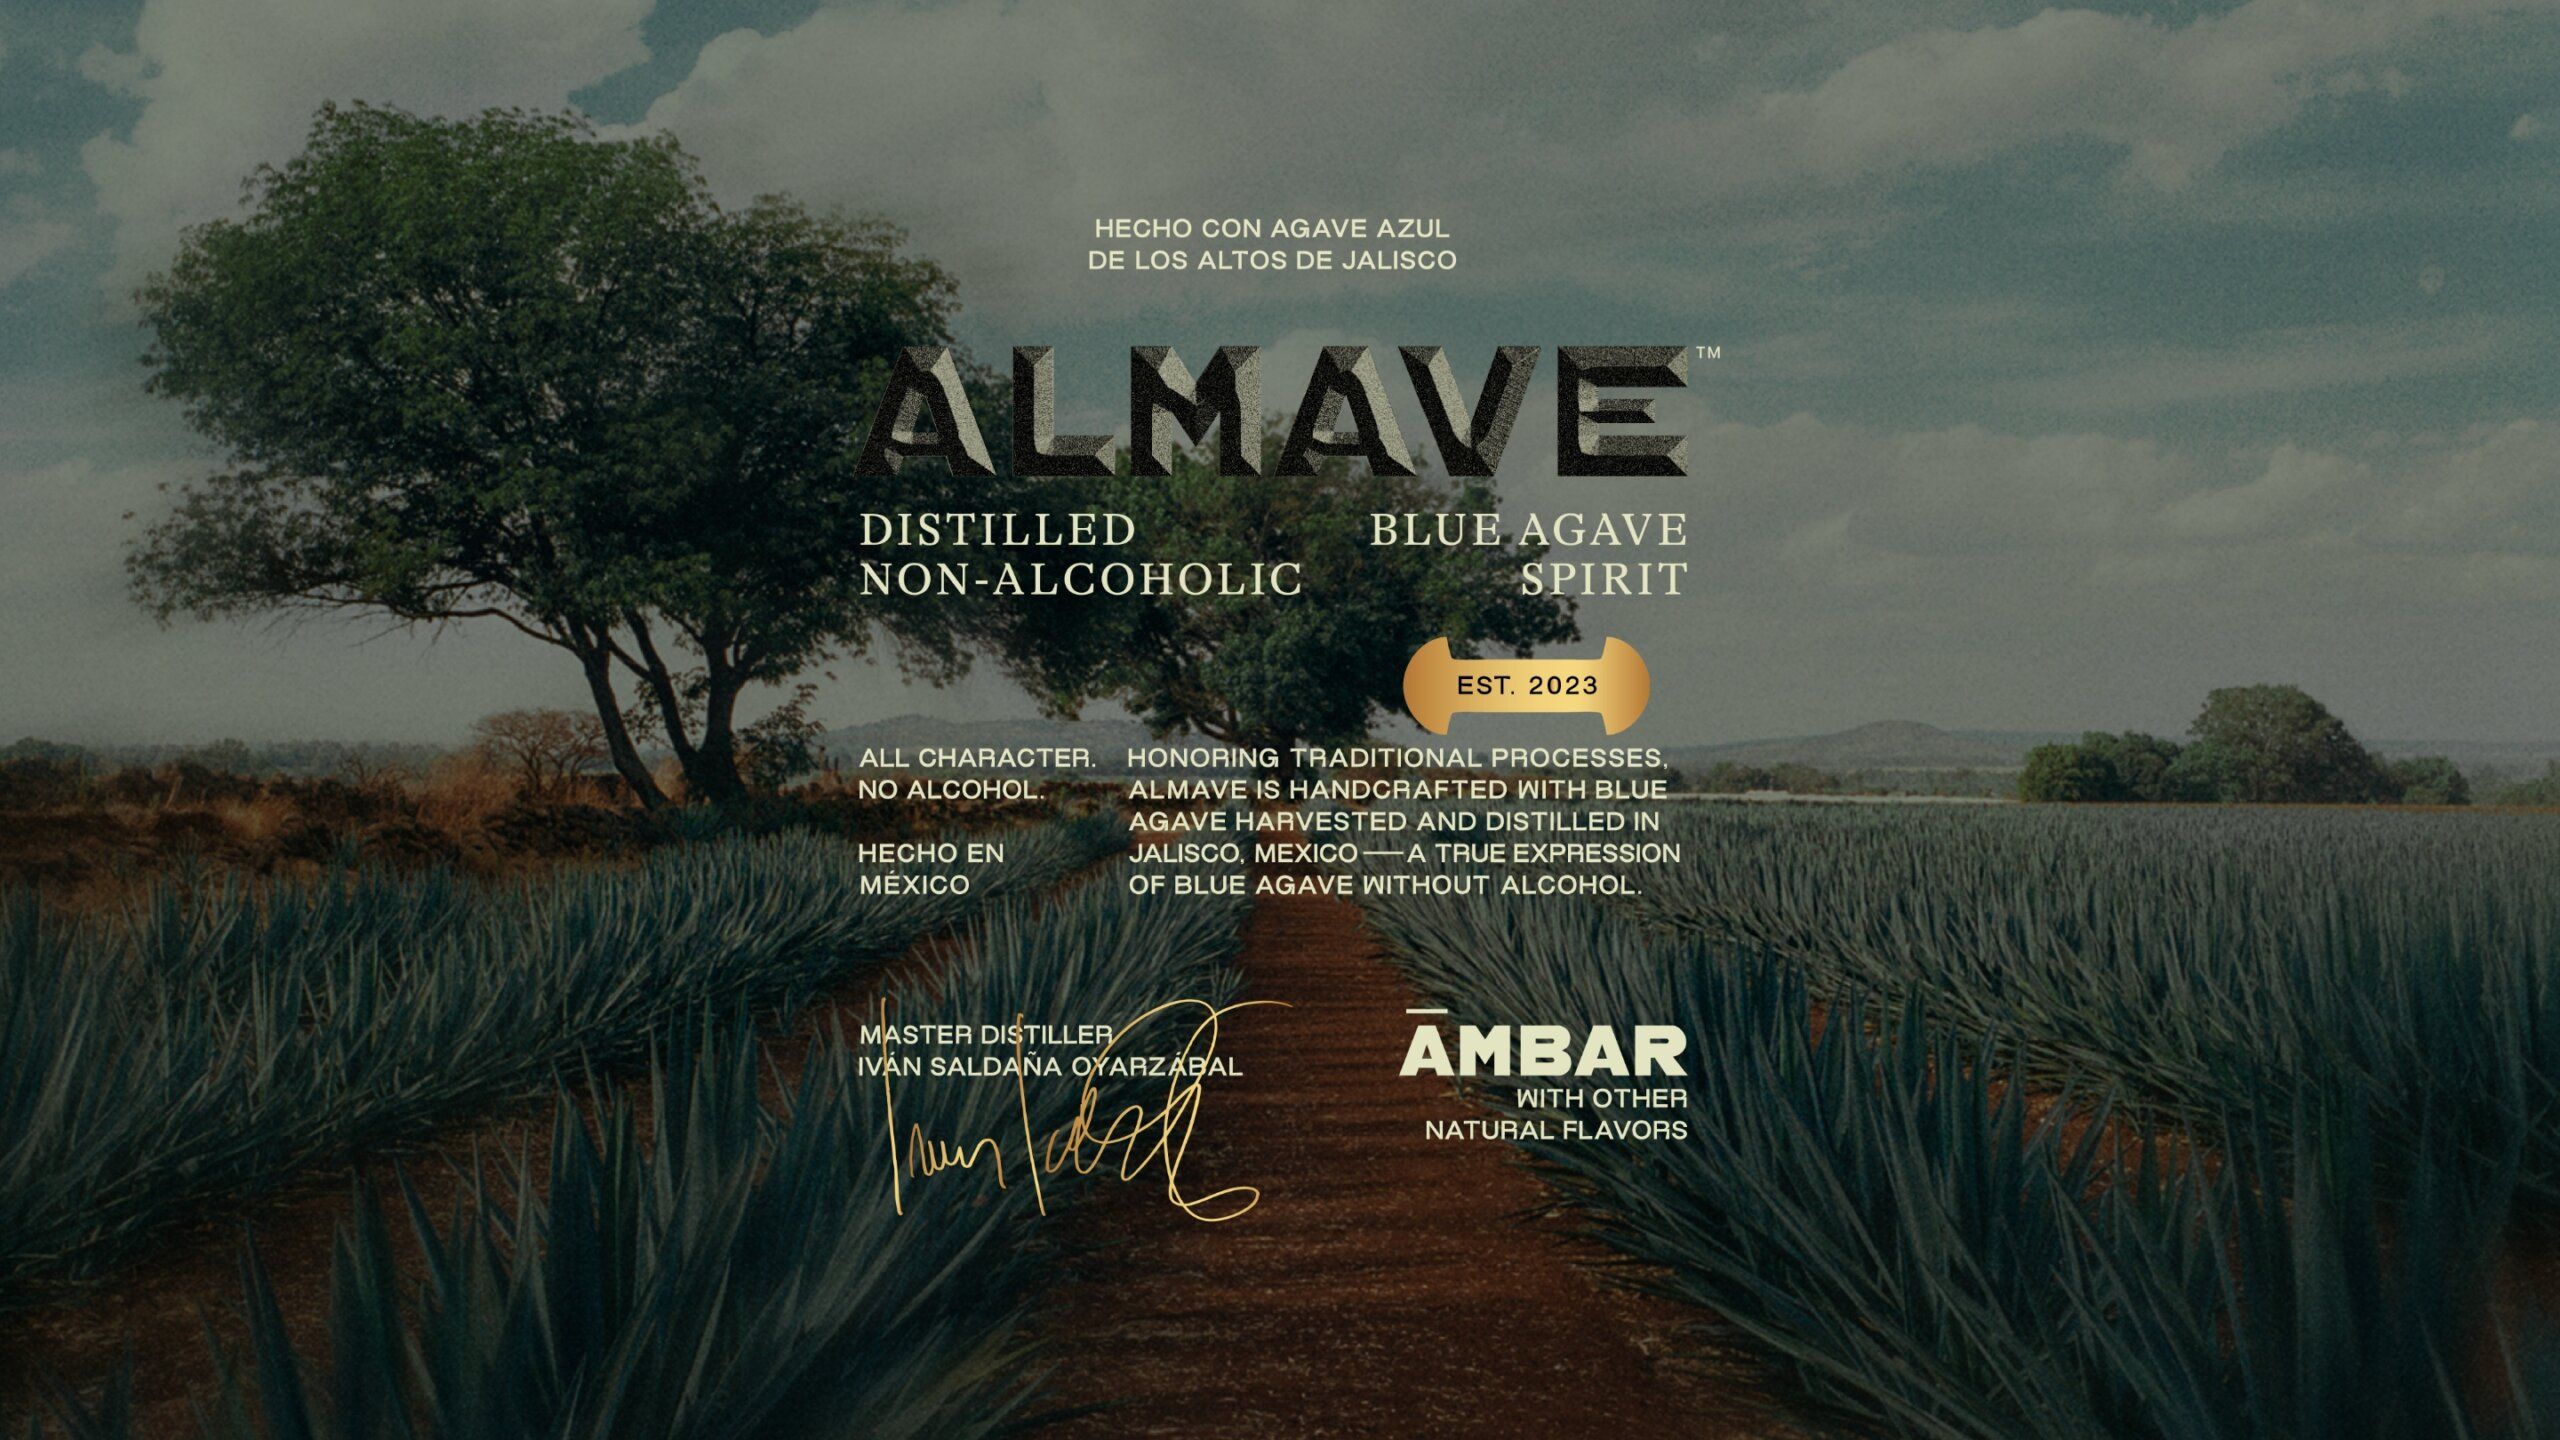 Almave Distilled non-alcoholic Blue Agave Spirit.